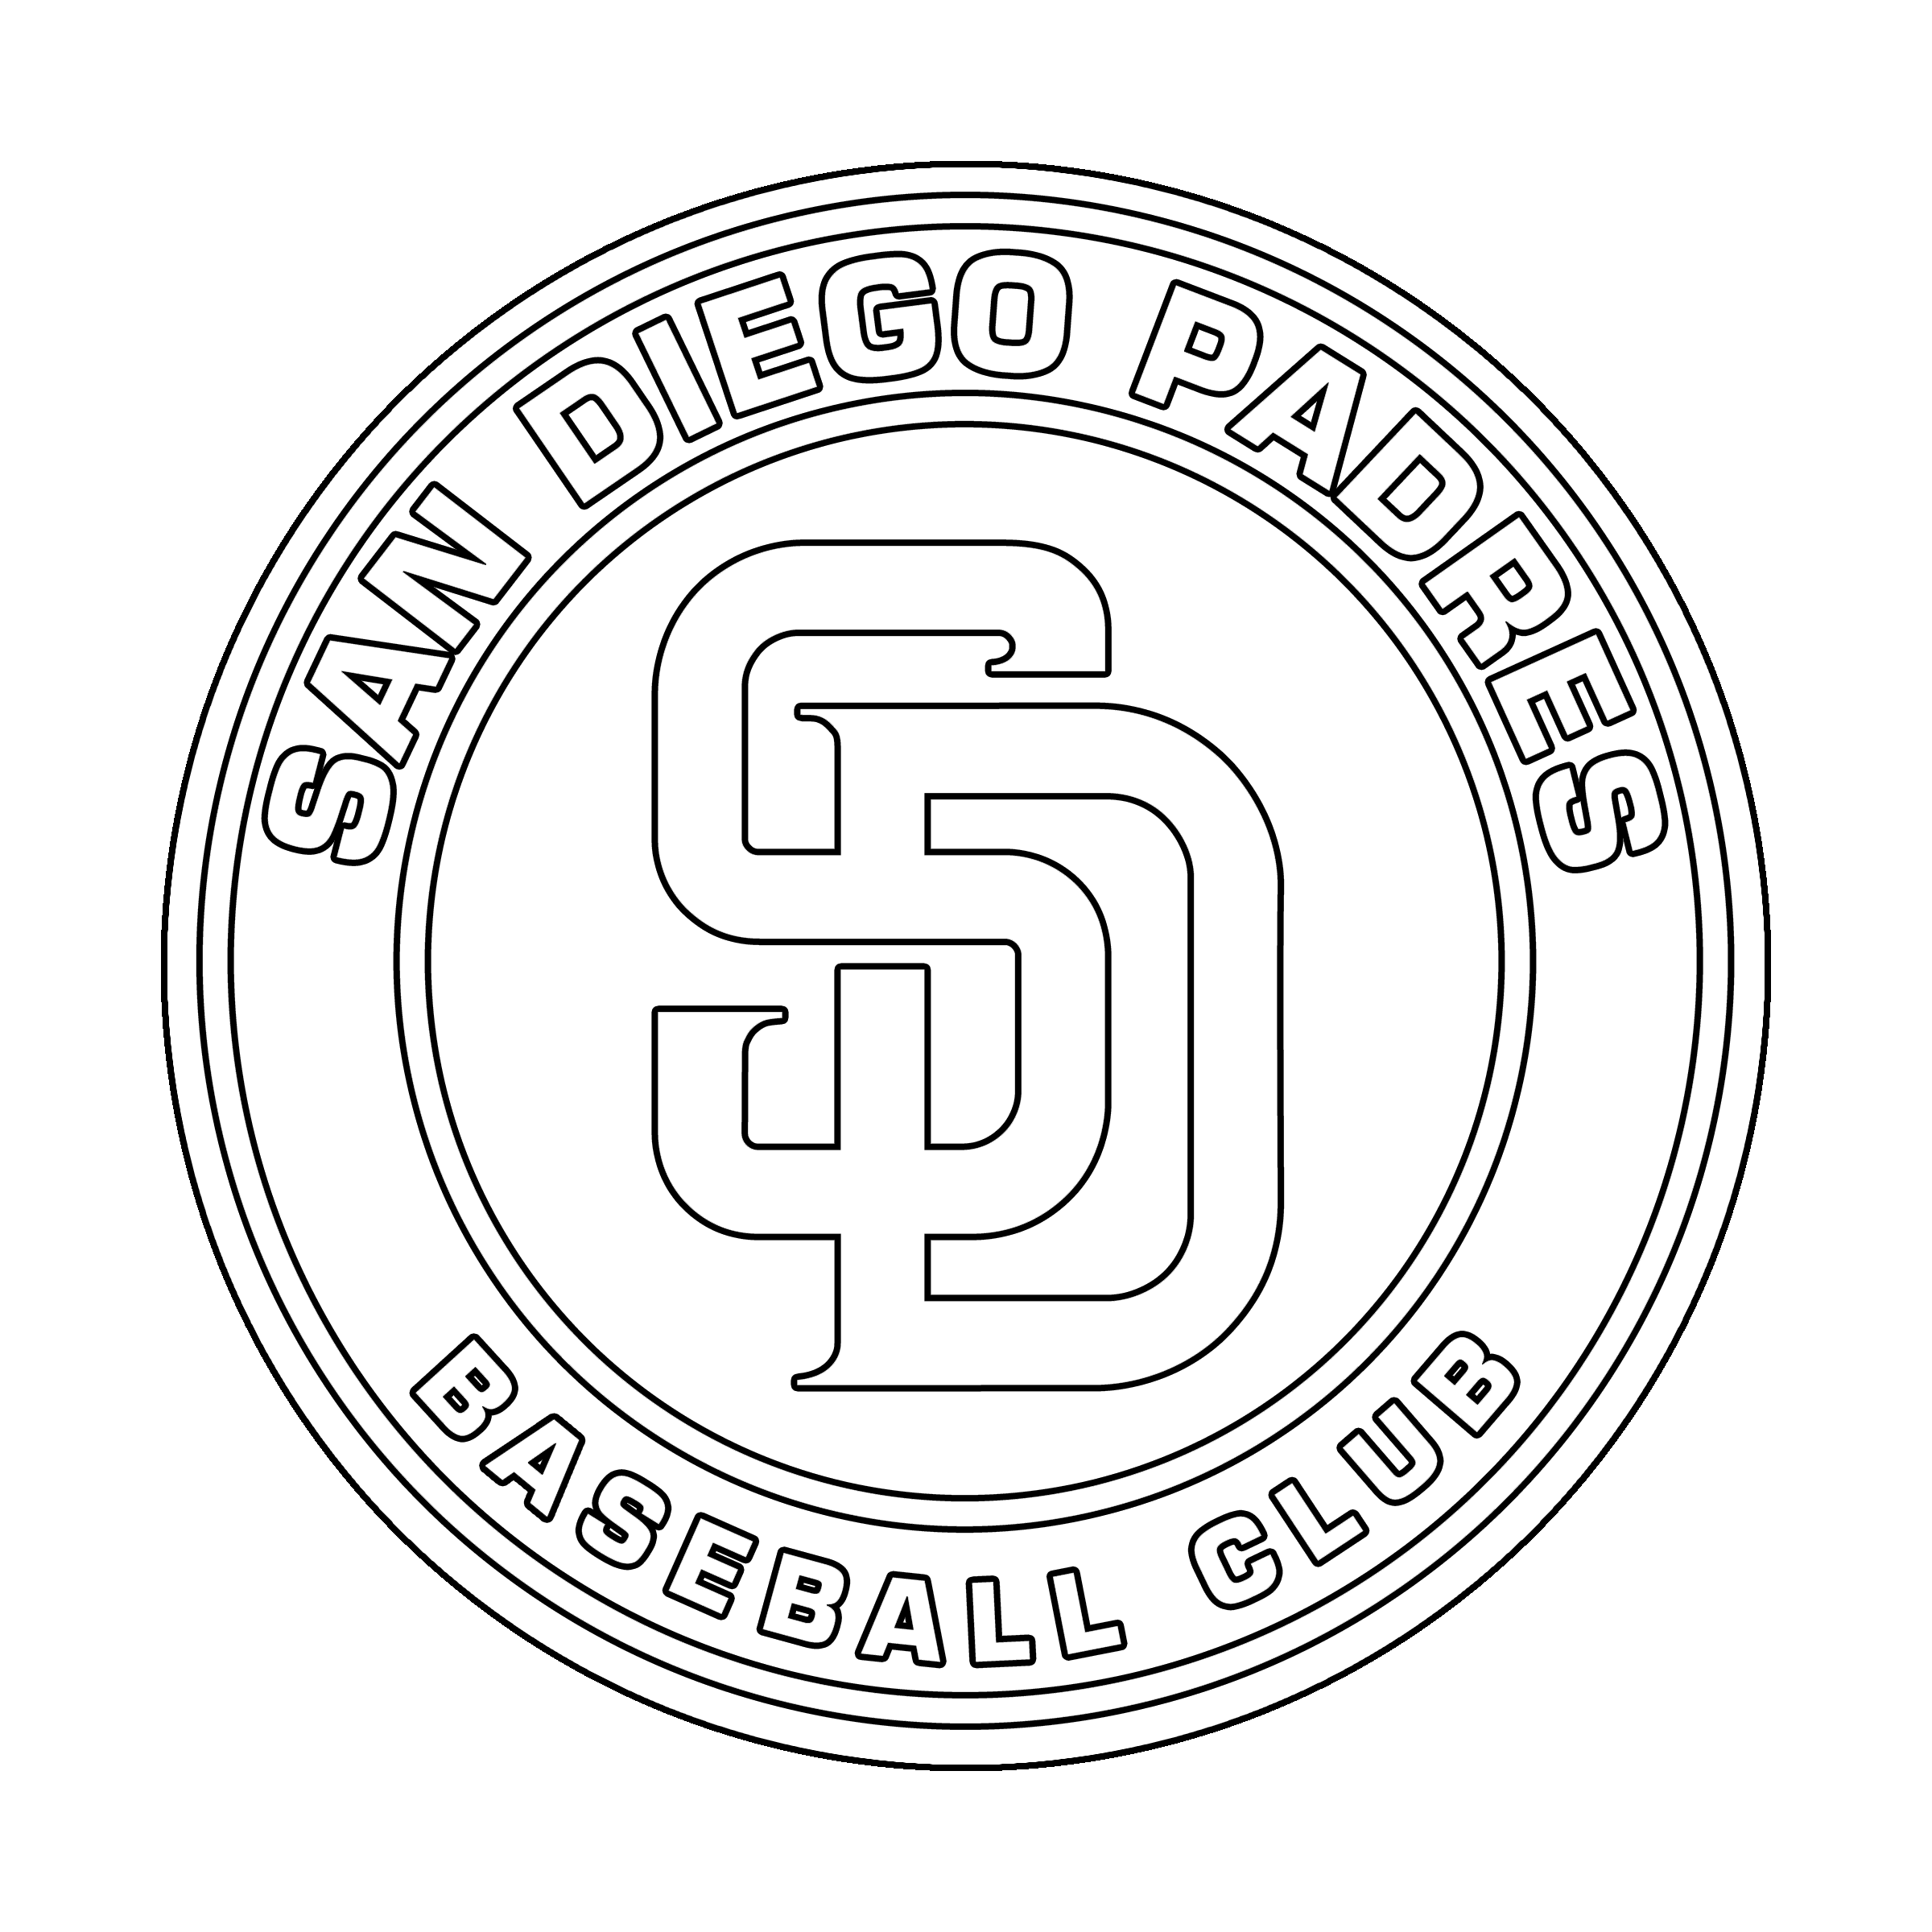 Padres Logo - San Diego Padres Logo PNG Transparent & SVG Vector - Freebie Supply